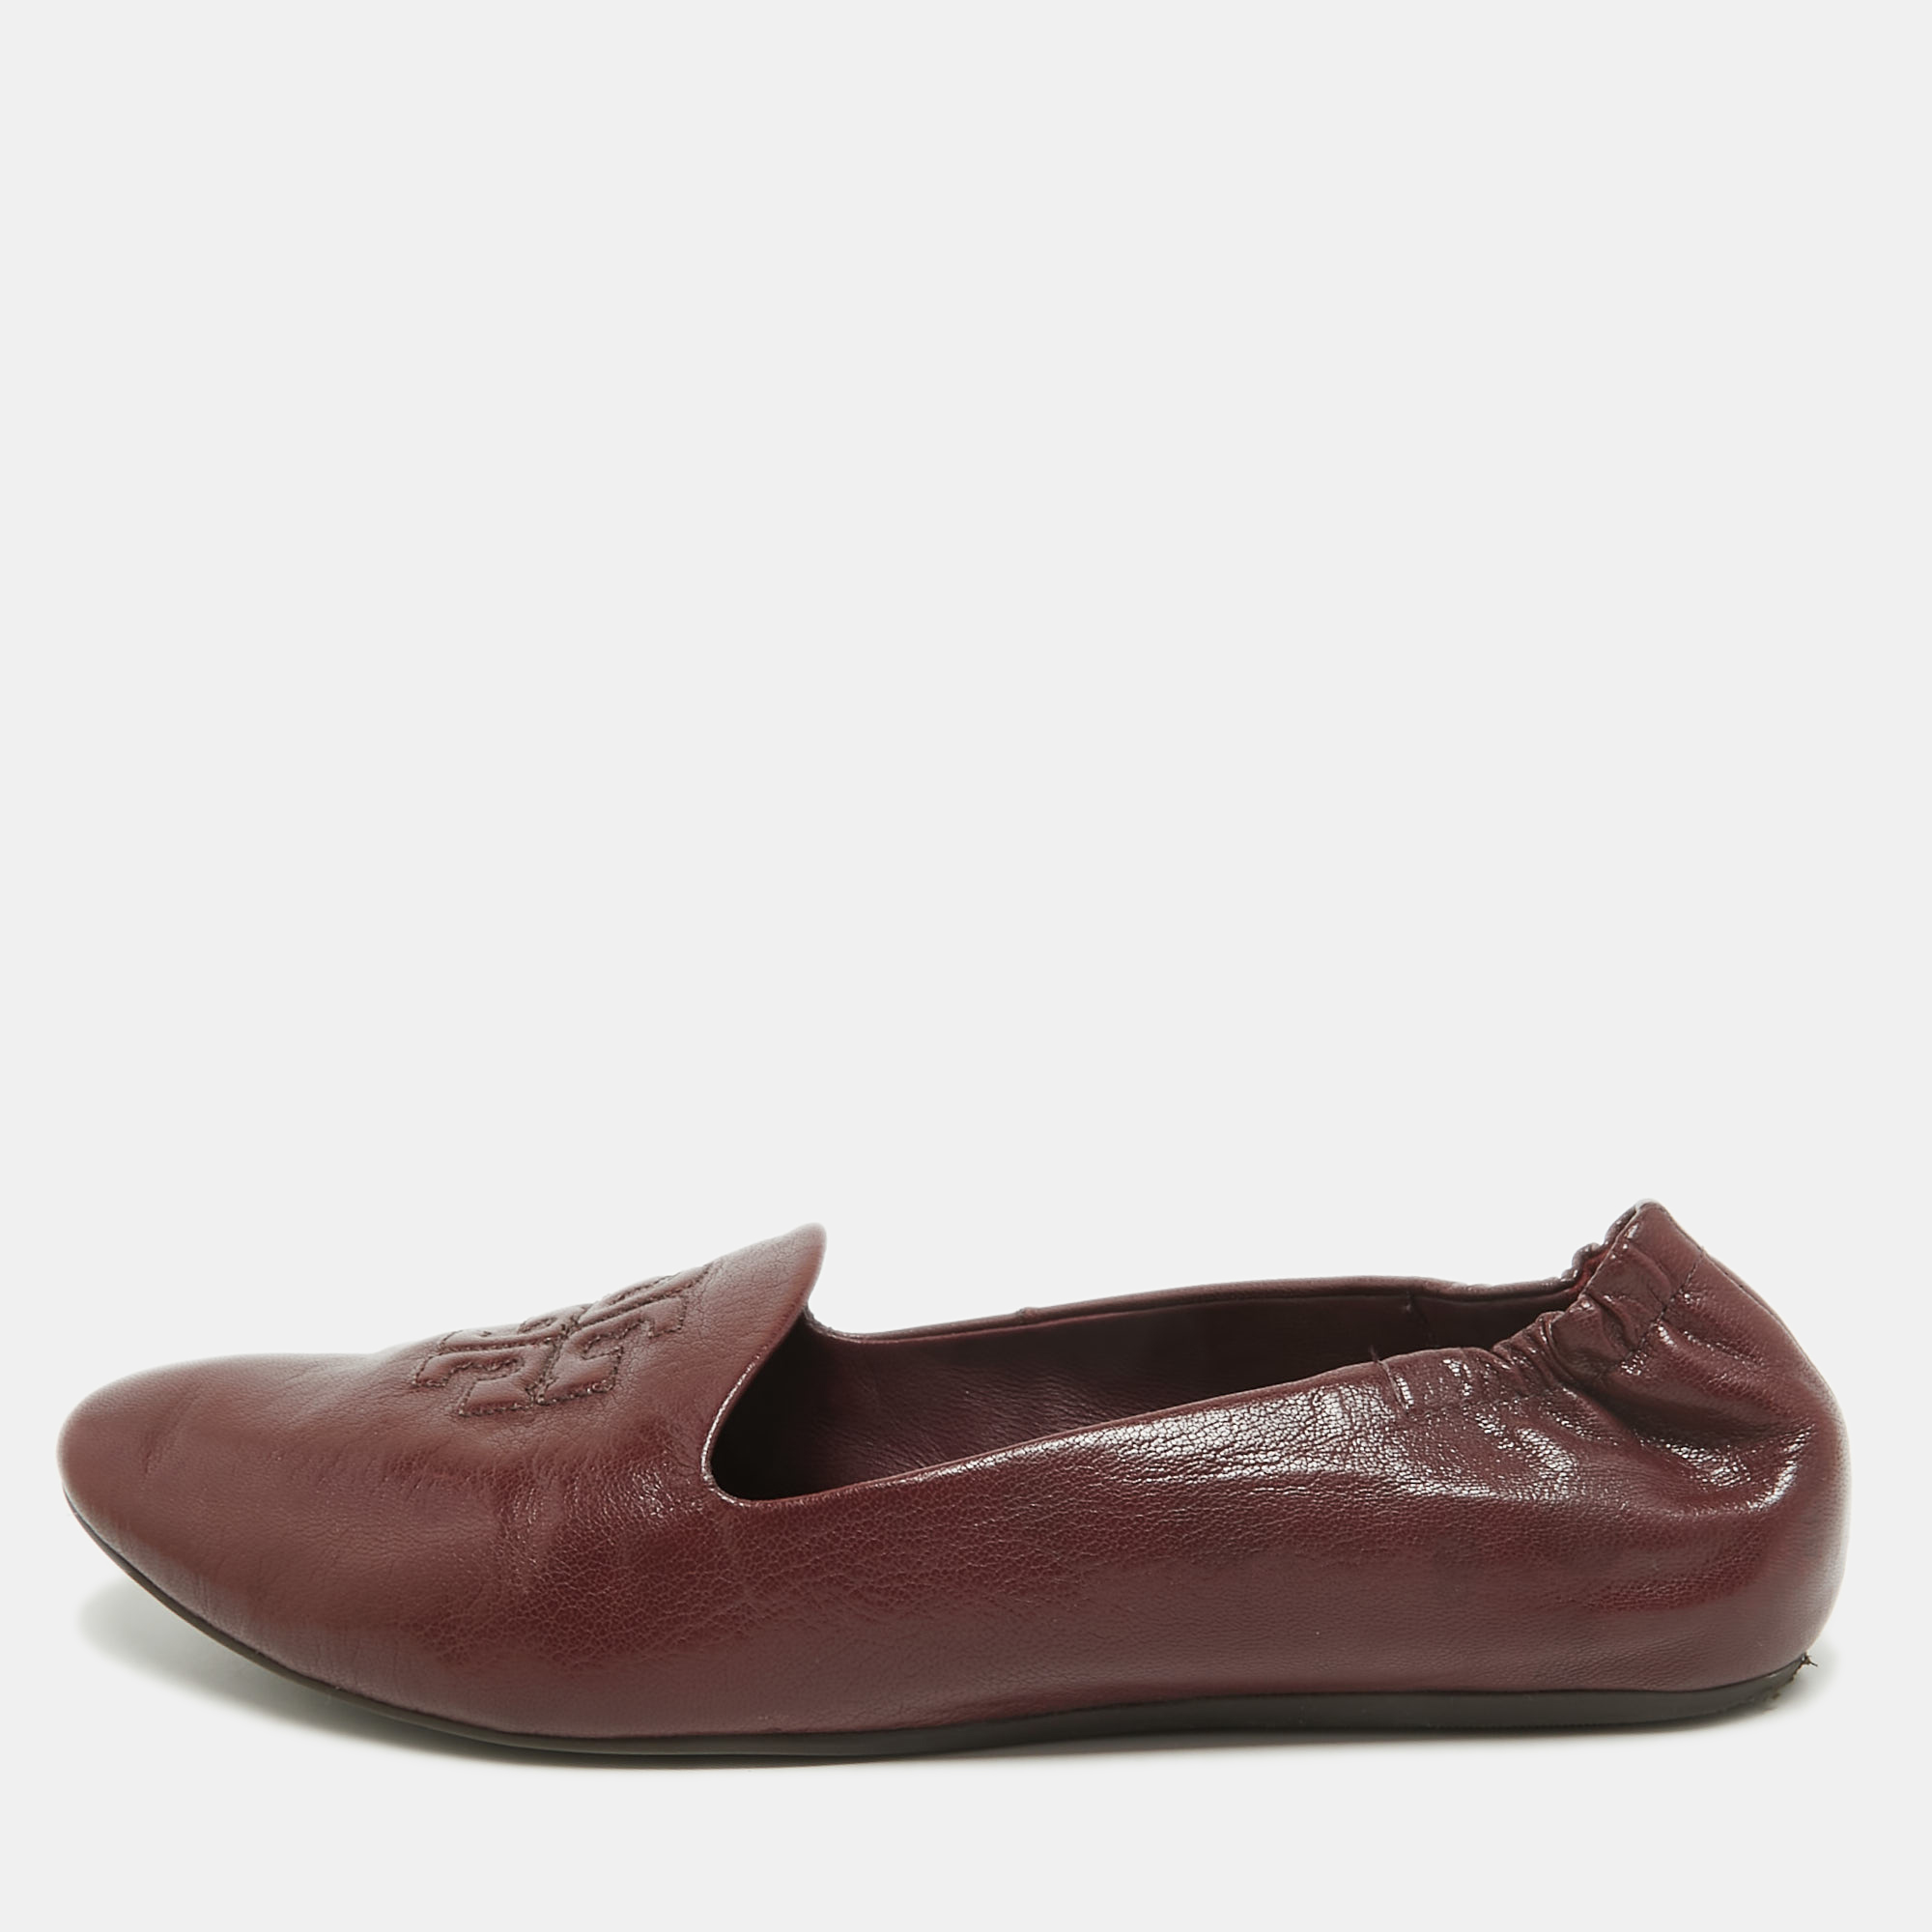 

Tory Burch Burgundy Leather Scrunch Reva Ballet Flats Size